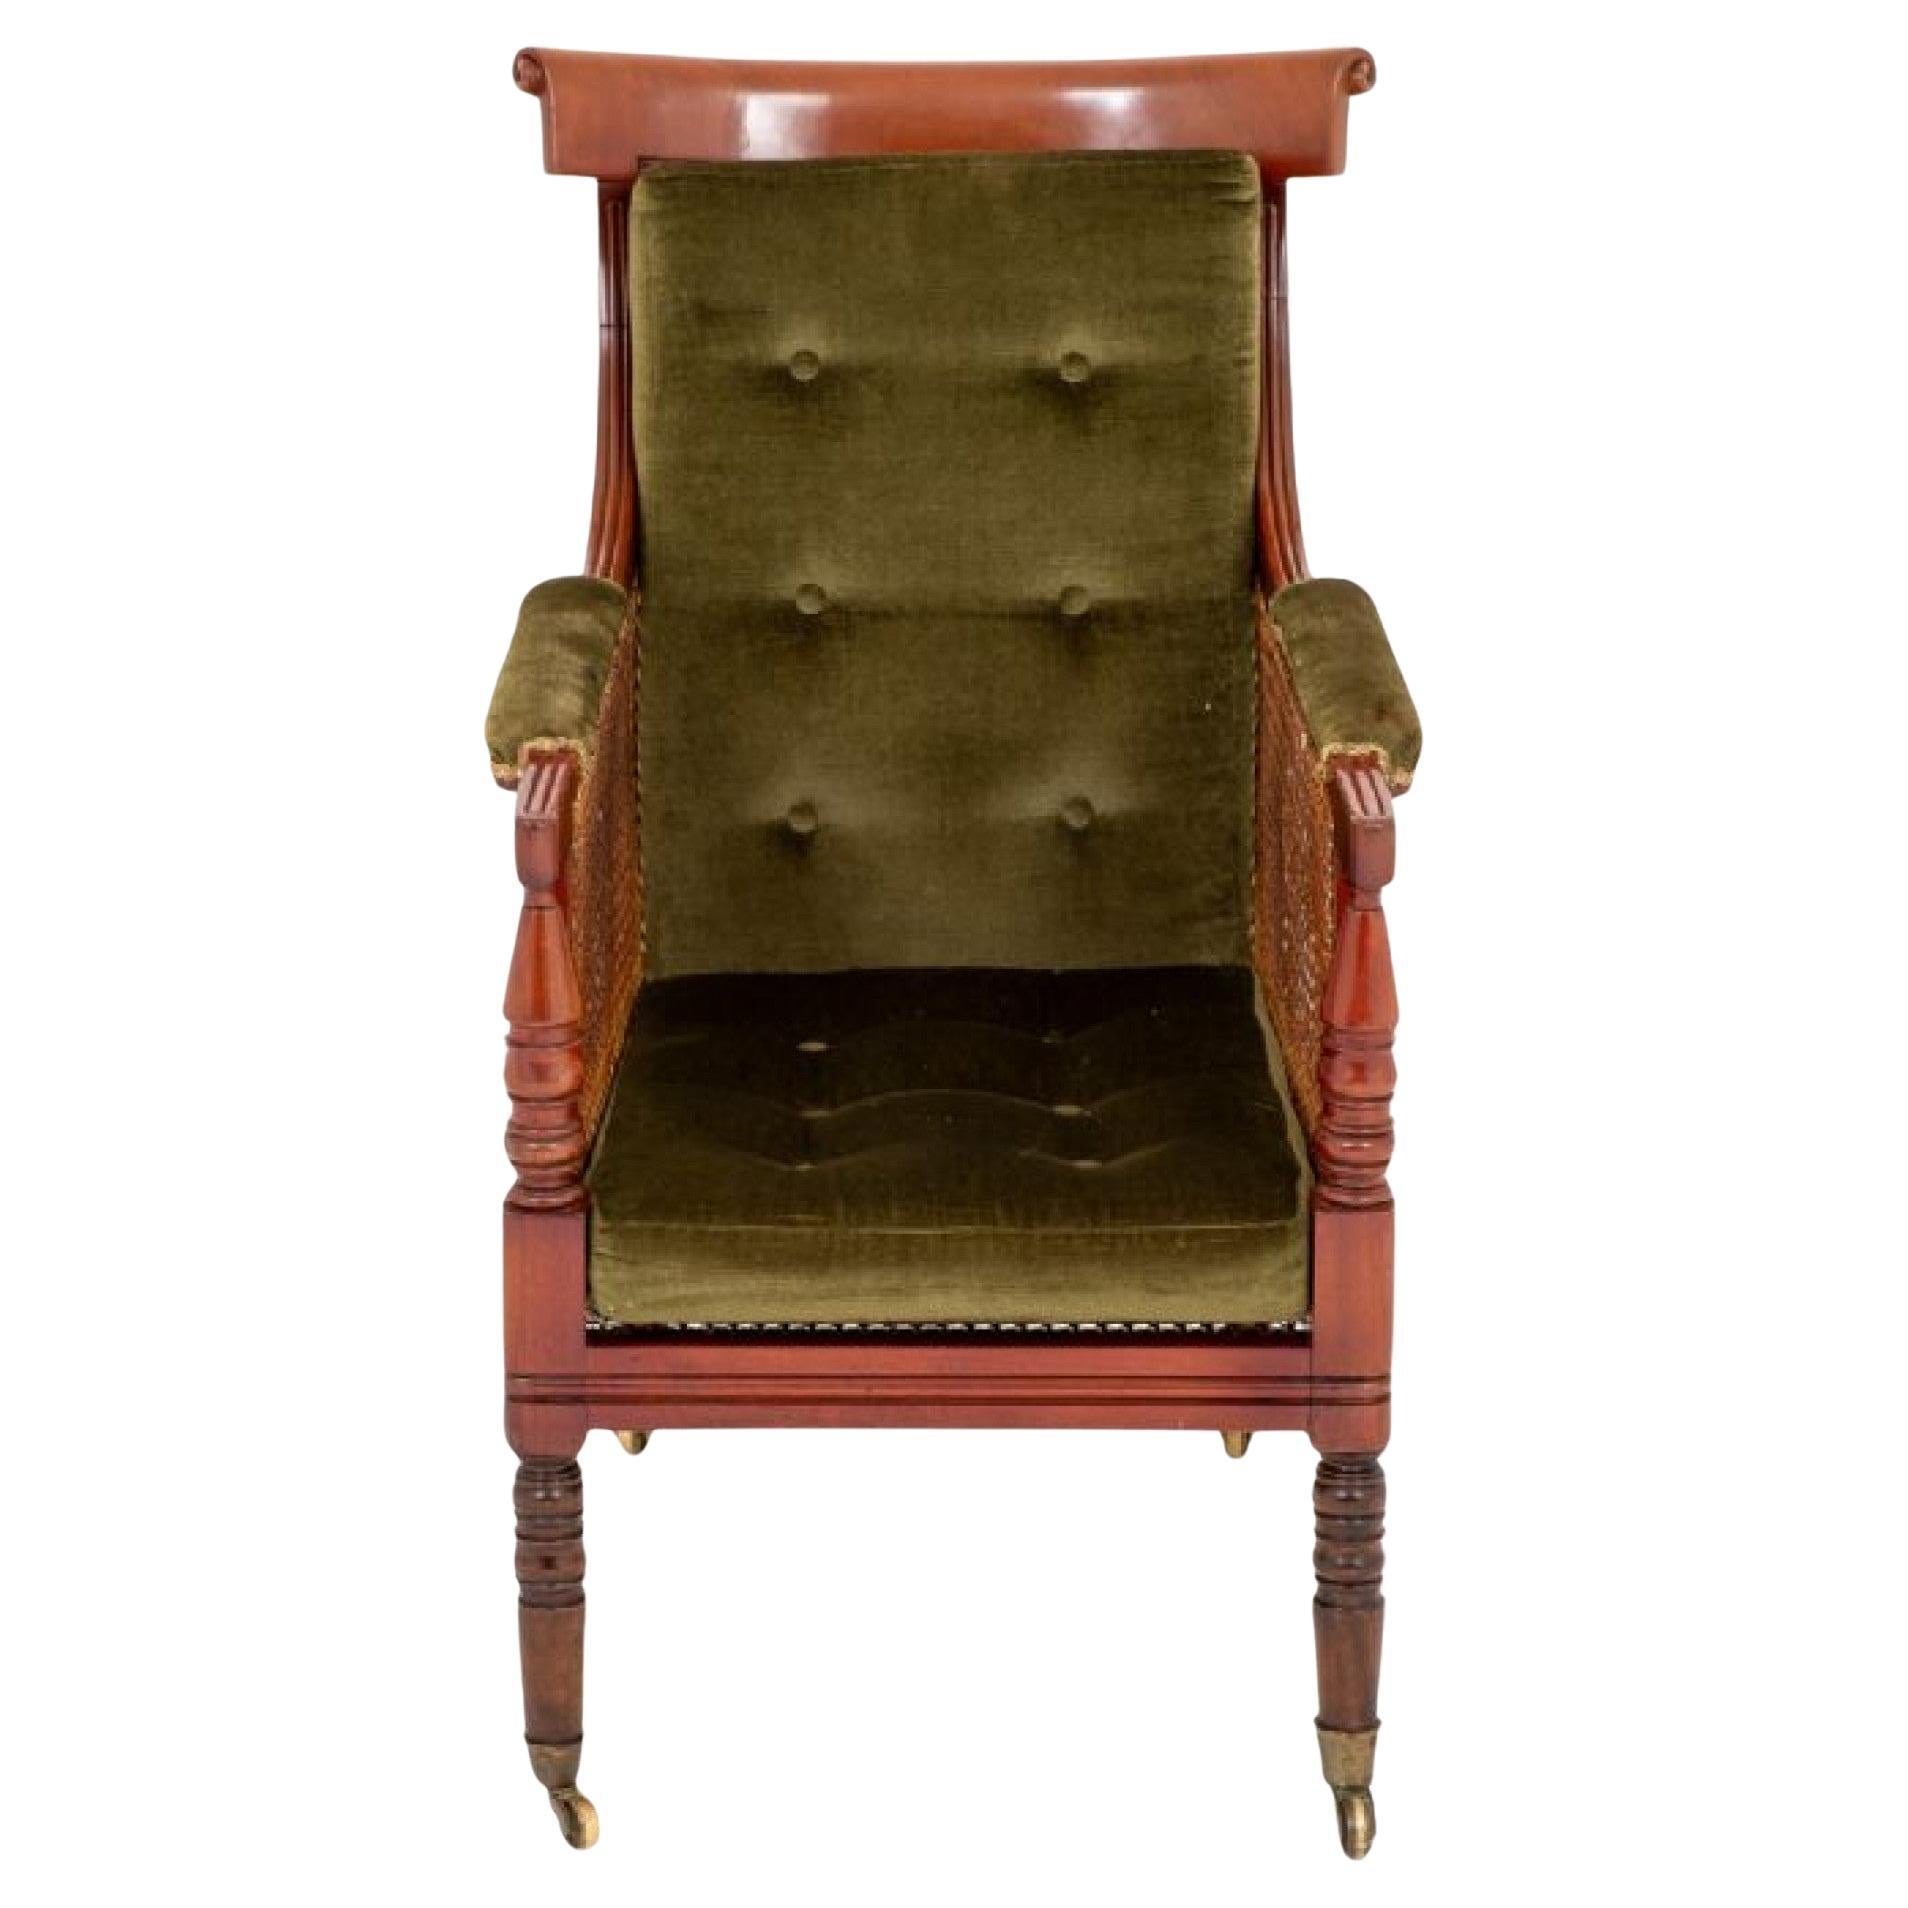 William IV Bergere Chair, Antique Mahogany, 19th Century